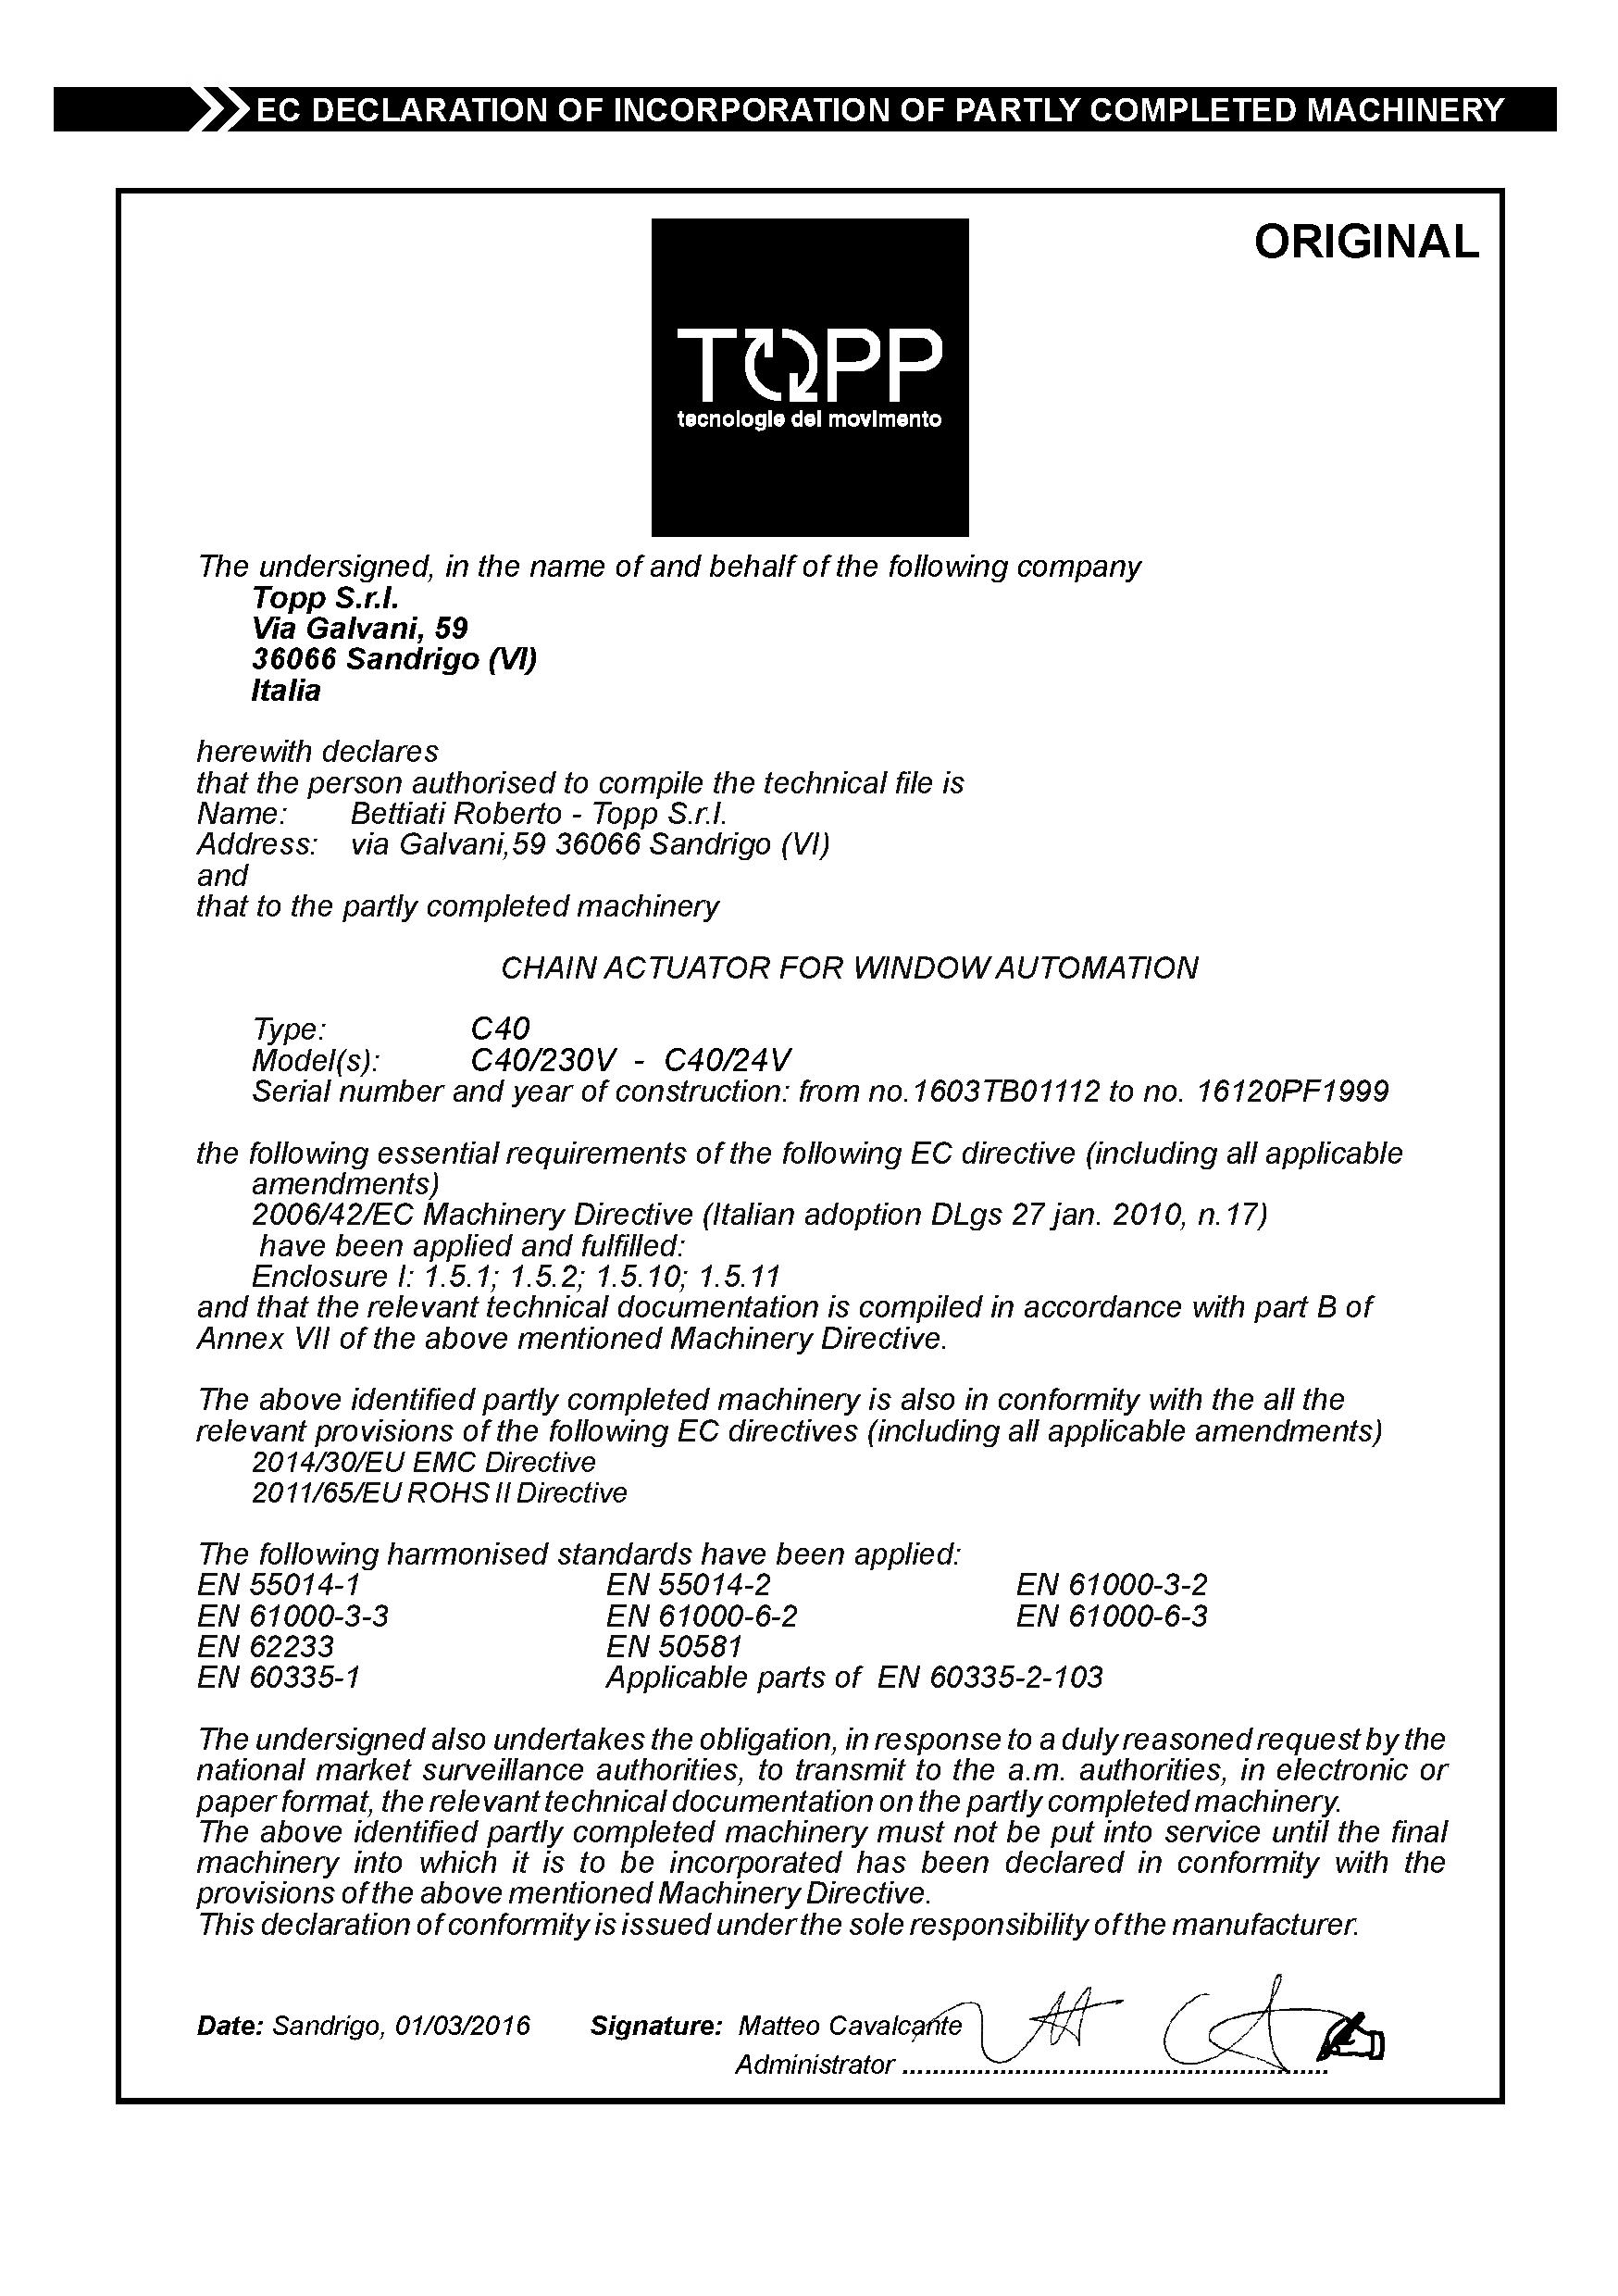 TOPP chain actuator C40 certifications